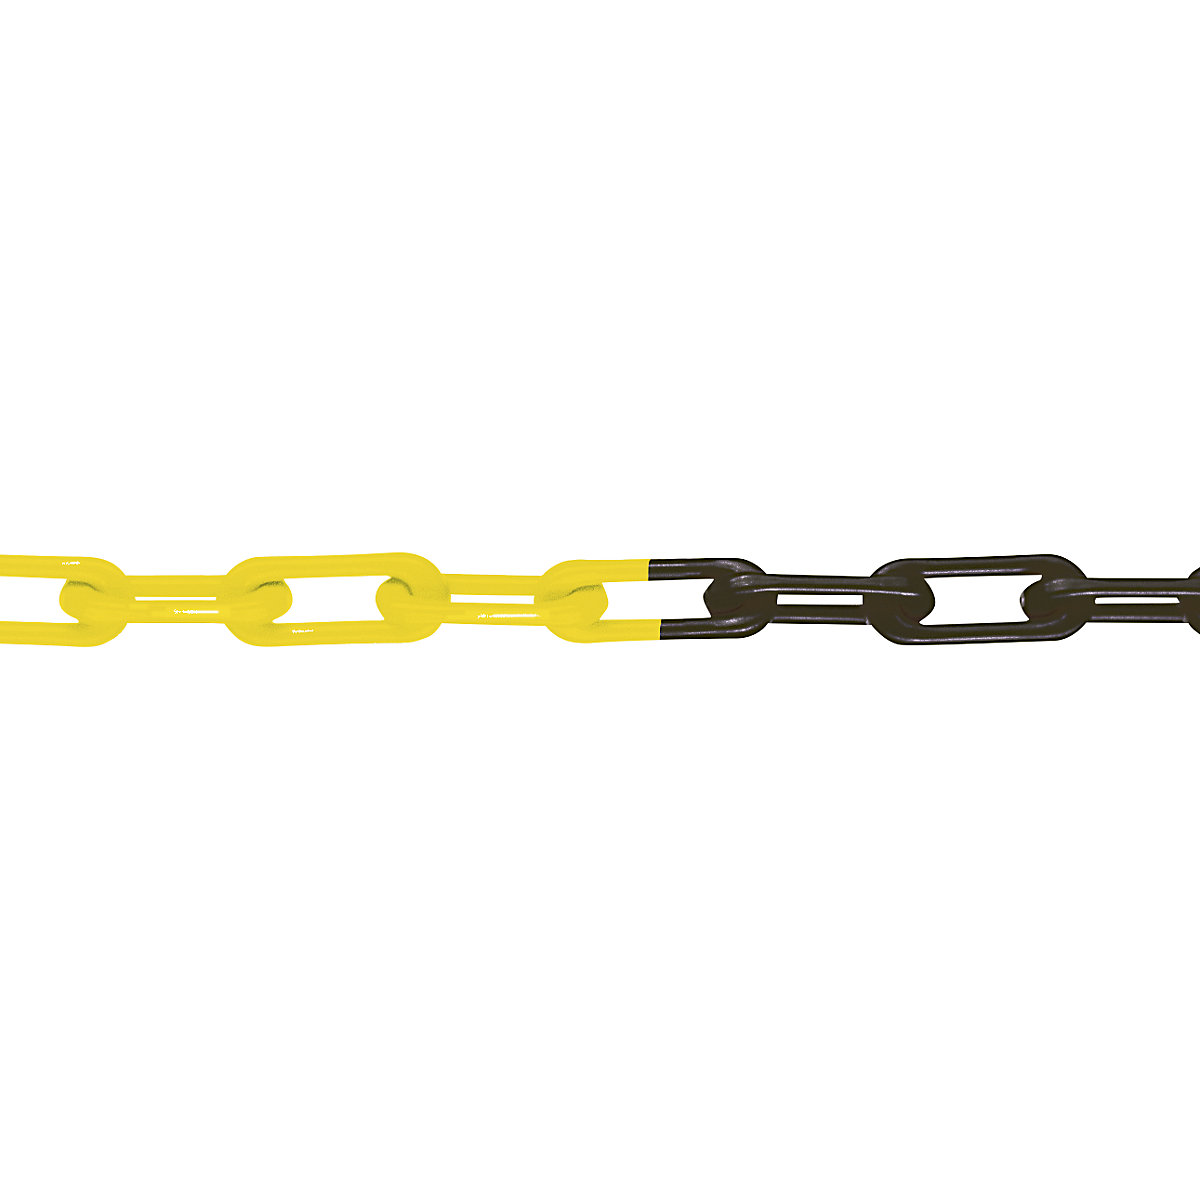 Nylon chain, MNK quality standard 6, band length 50 m, black/yellow, 10+ items-2